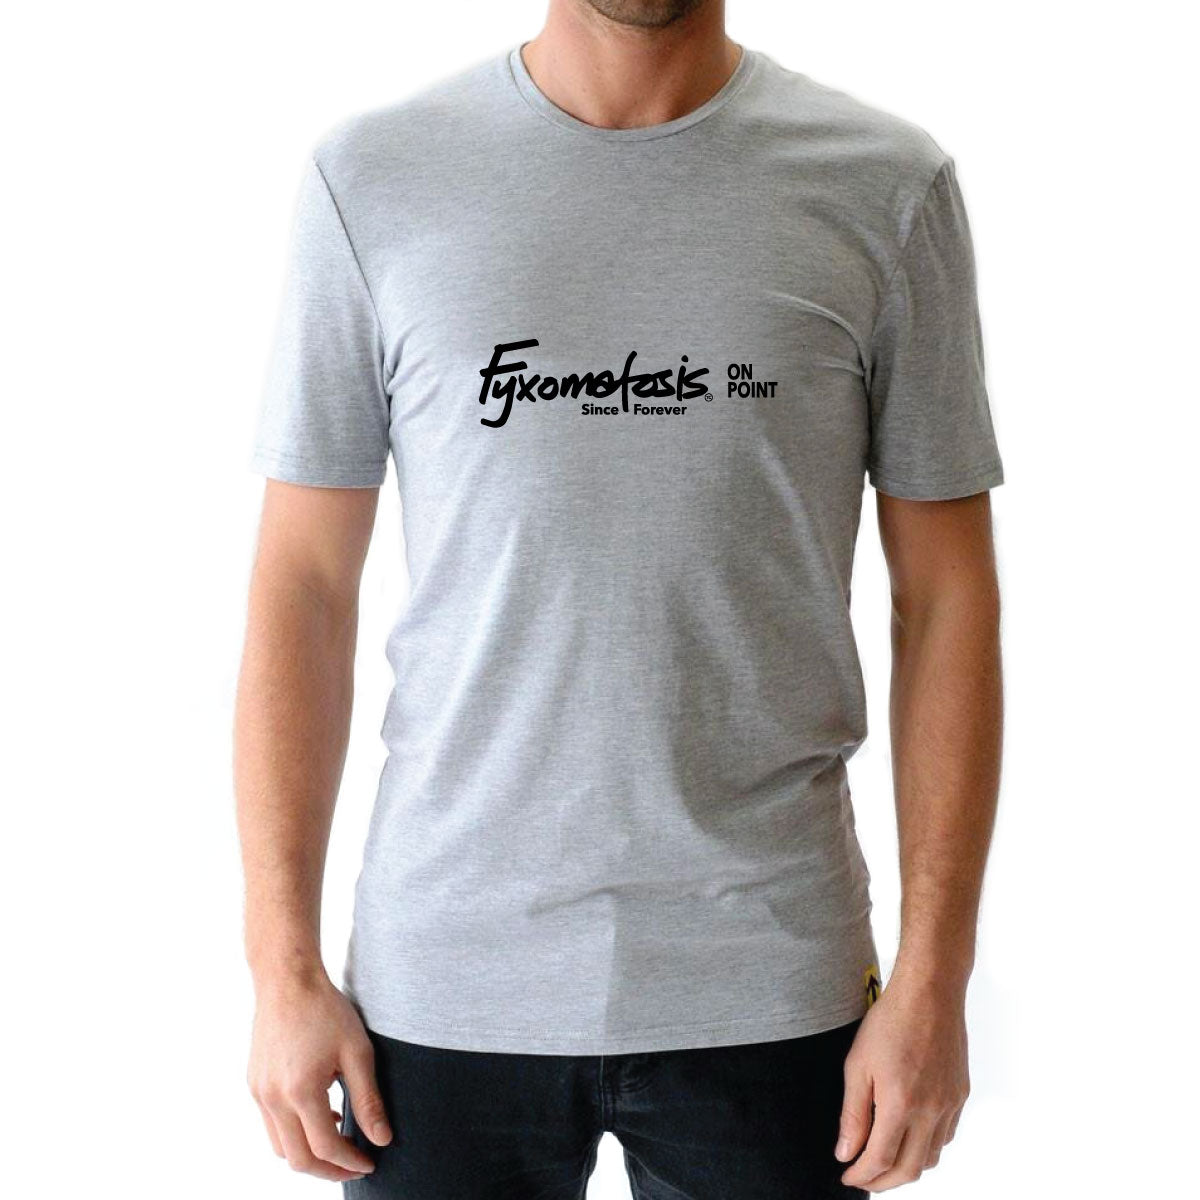 Fyxomatosis On Point T-shirt - FYXO